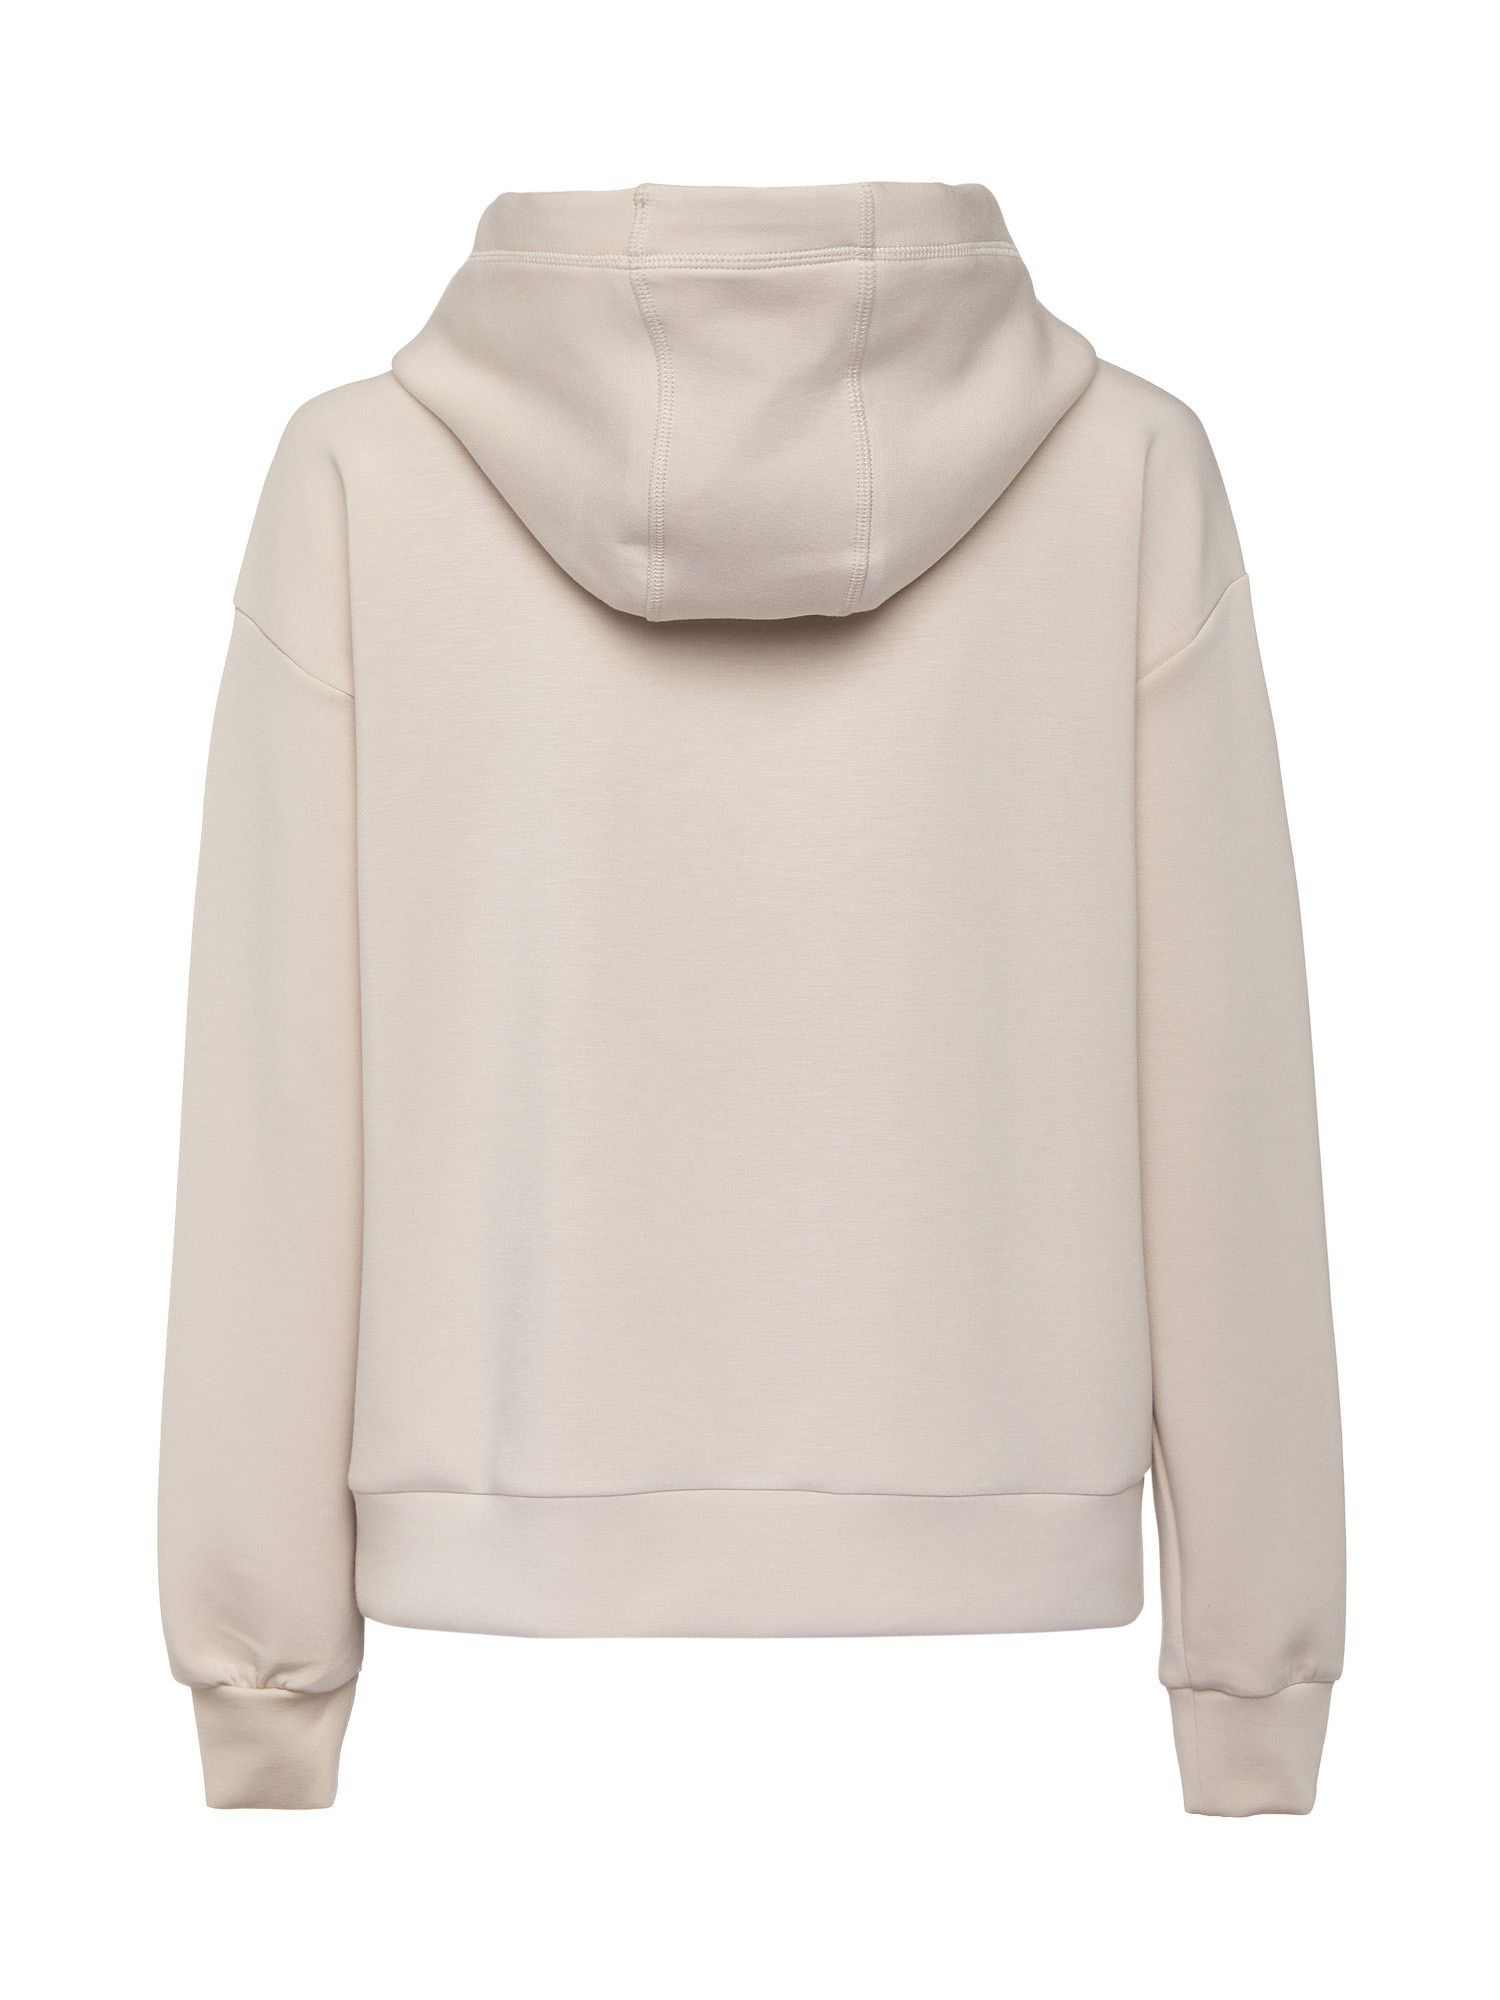 Armani Exchange - Hooded sweatshirt with logo print, Light Beige, large image number 1